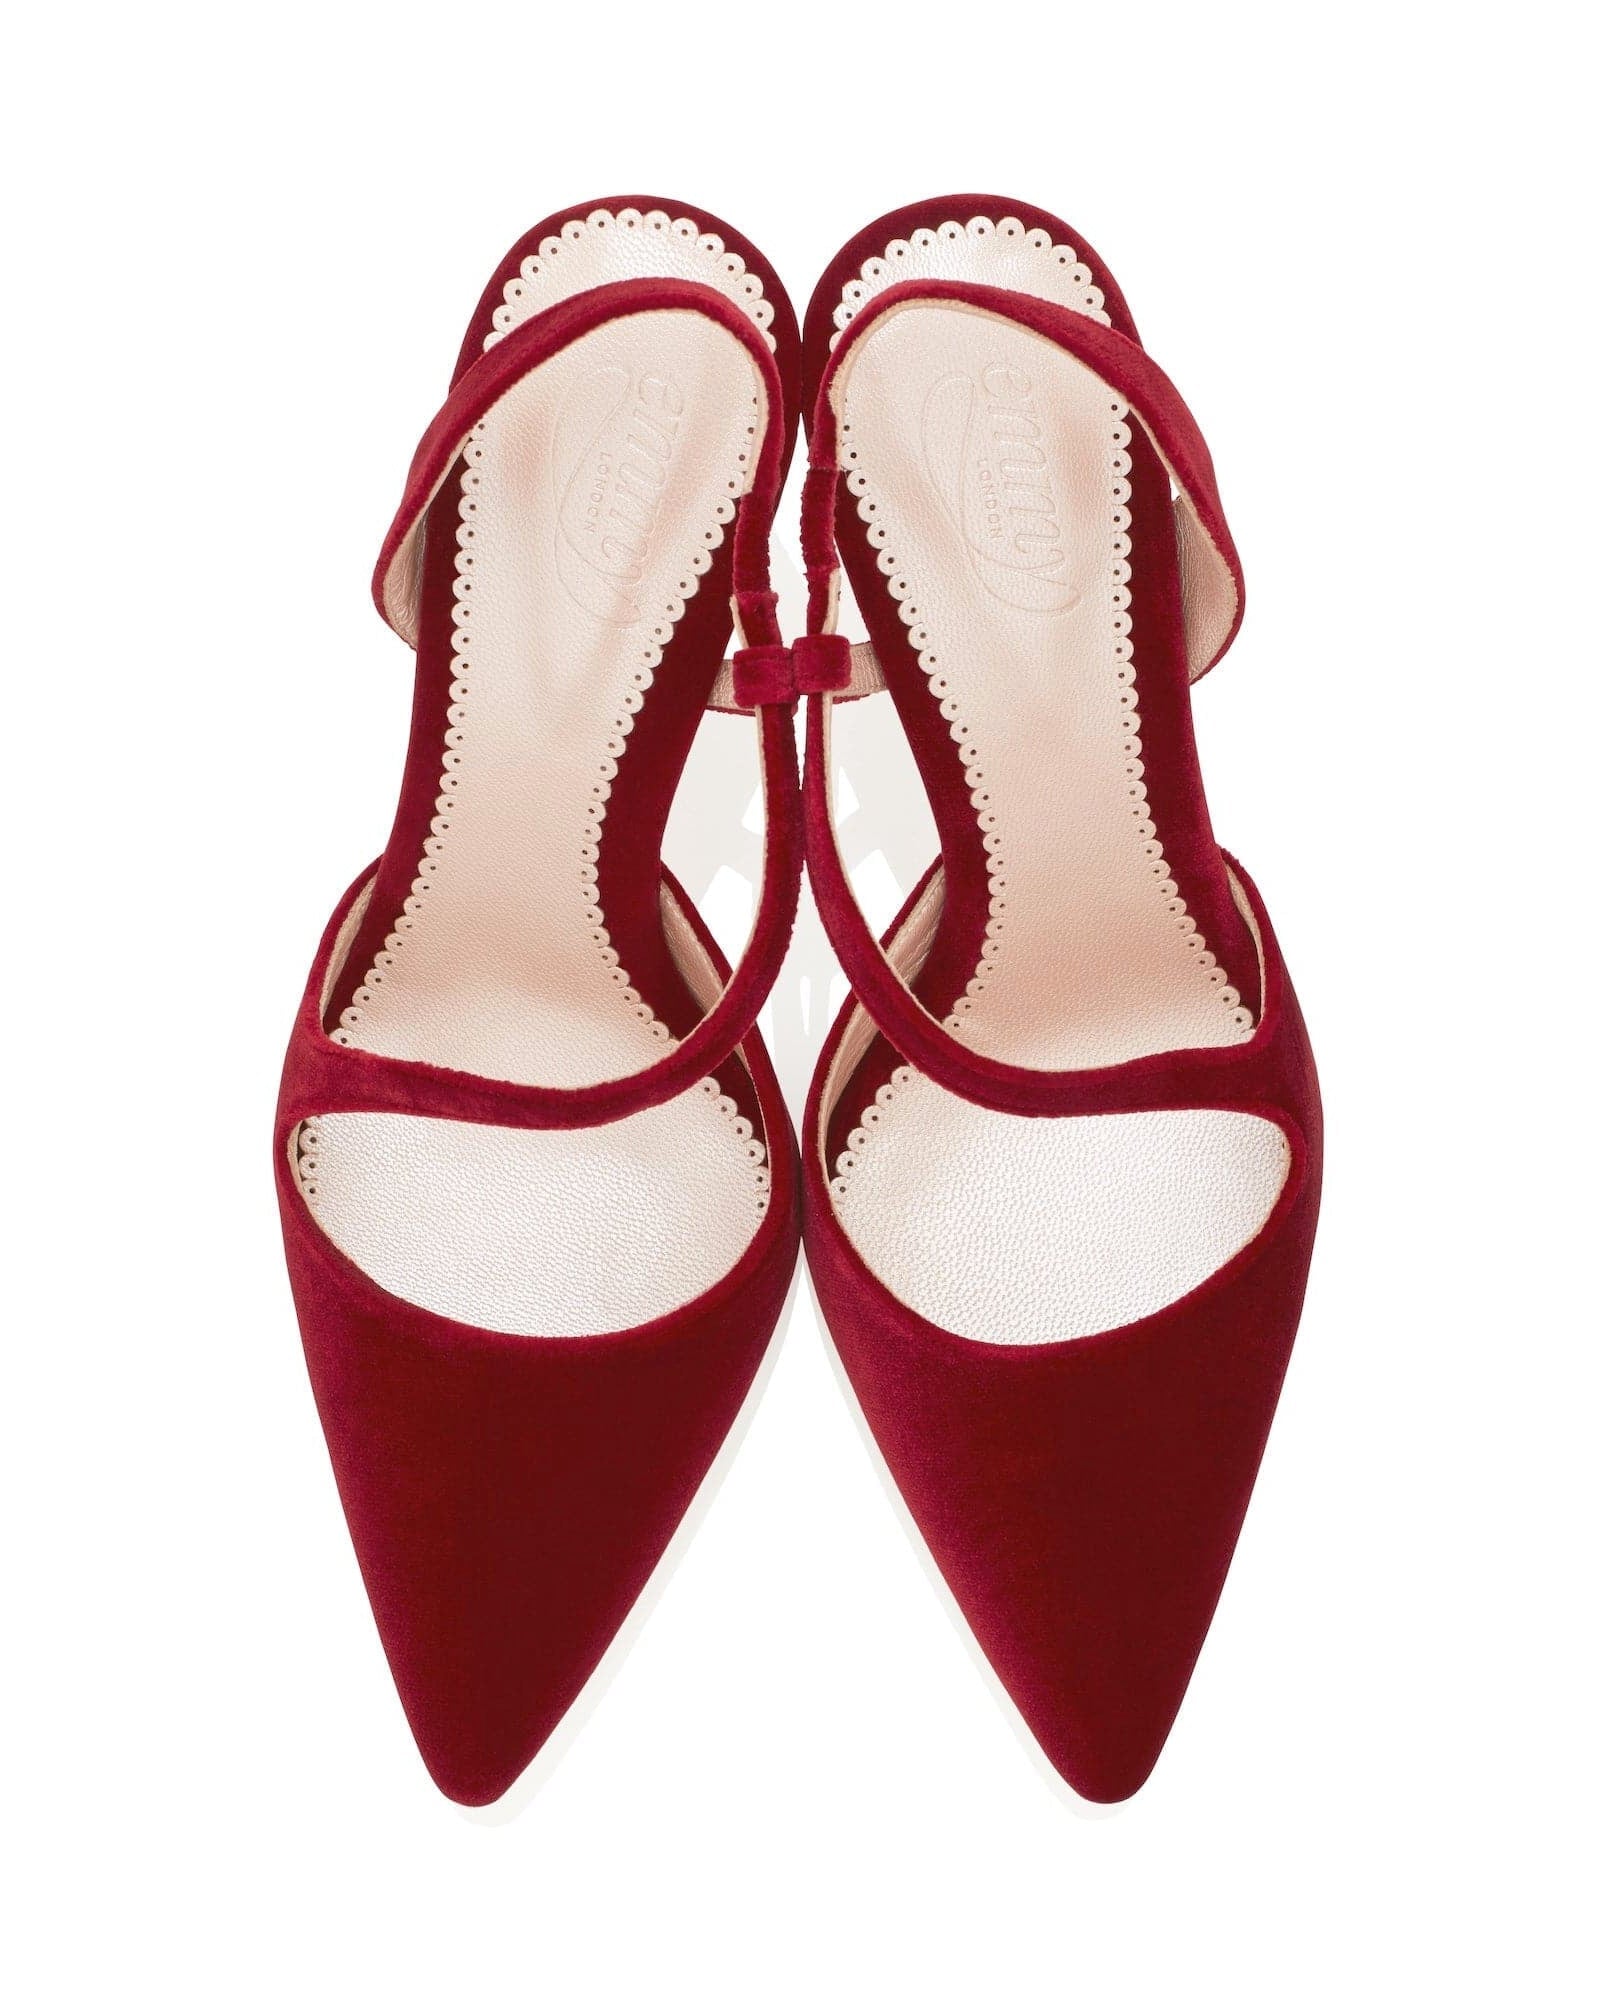 Anna Mid Heel Fashion Shoe Red Velvet Shoes  image